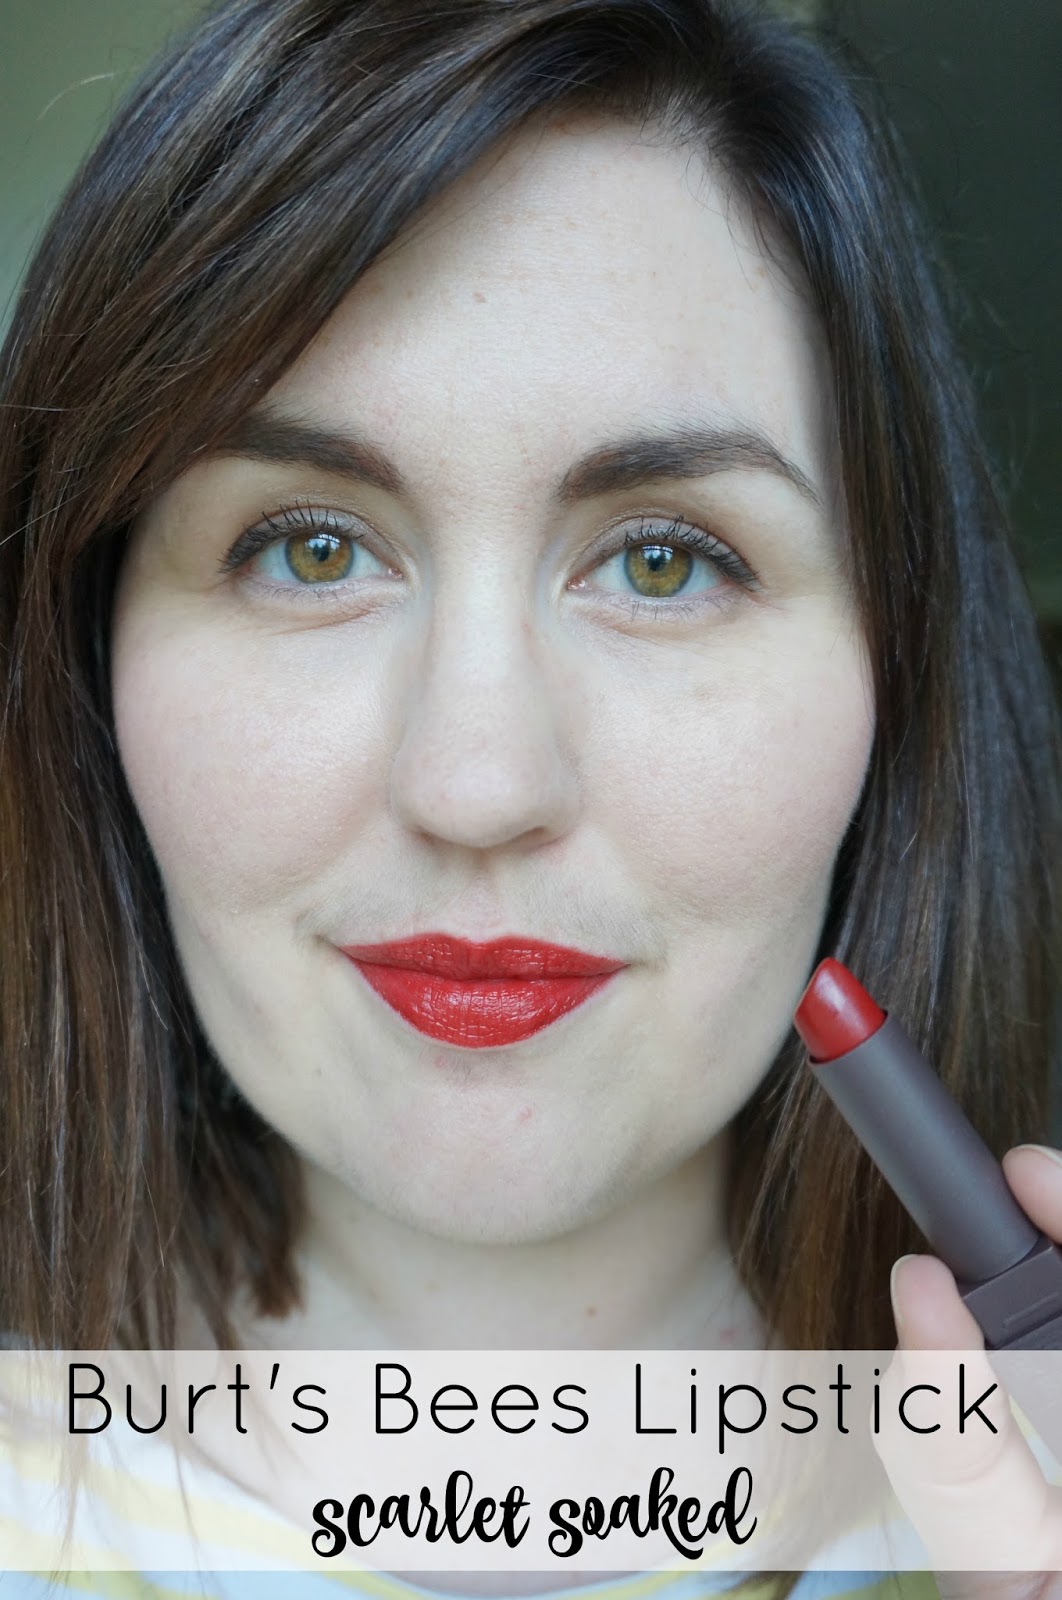 Makeup Monday: Burts Bees Lipstick by North Carolina style blogger Rebecca Lately